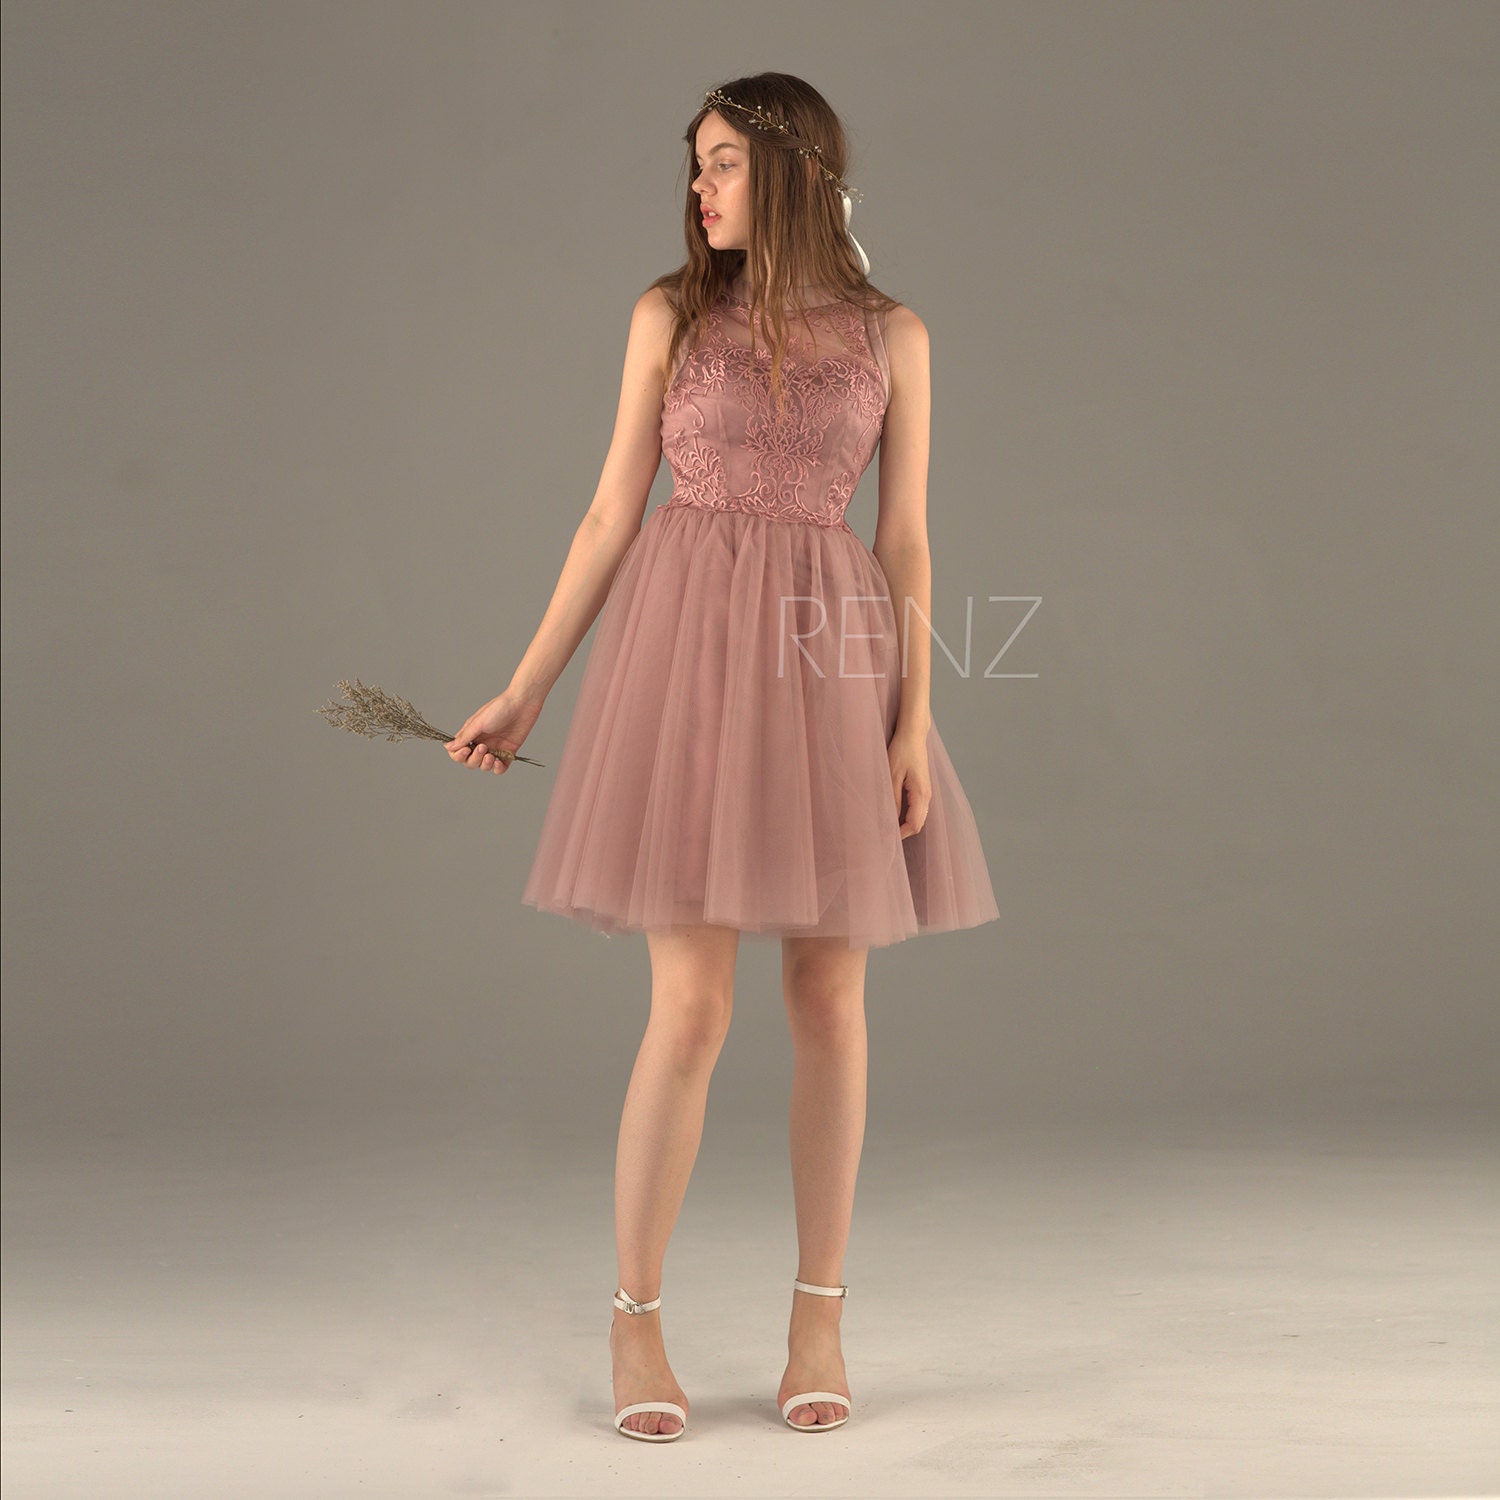 Wear rose colored short dresses for sale